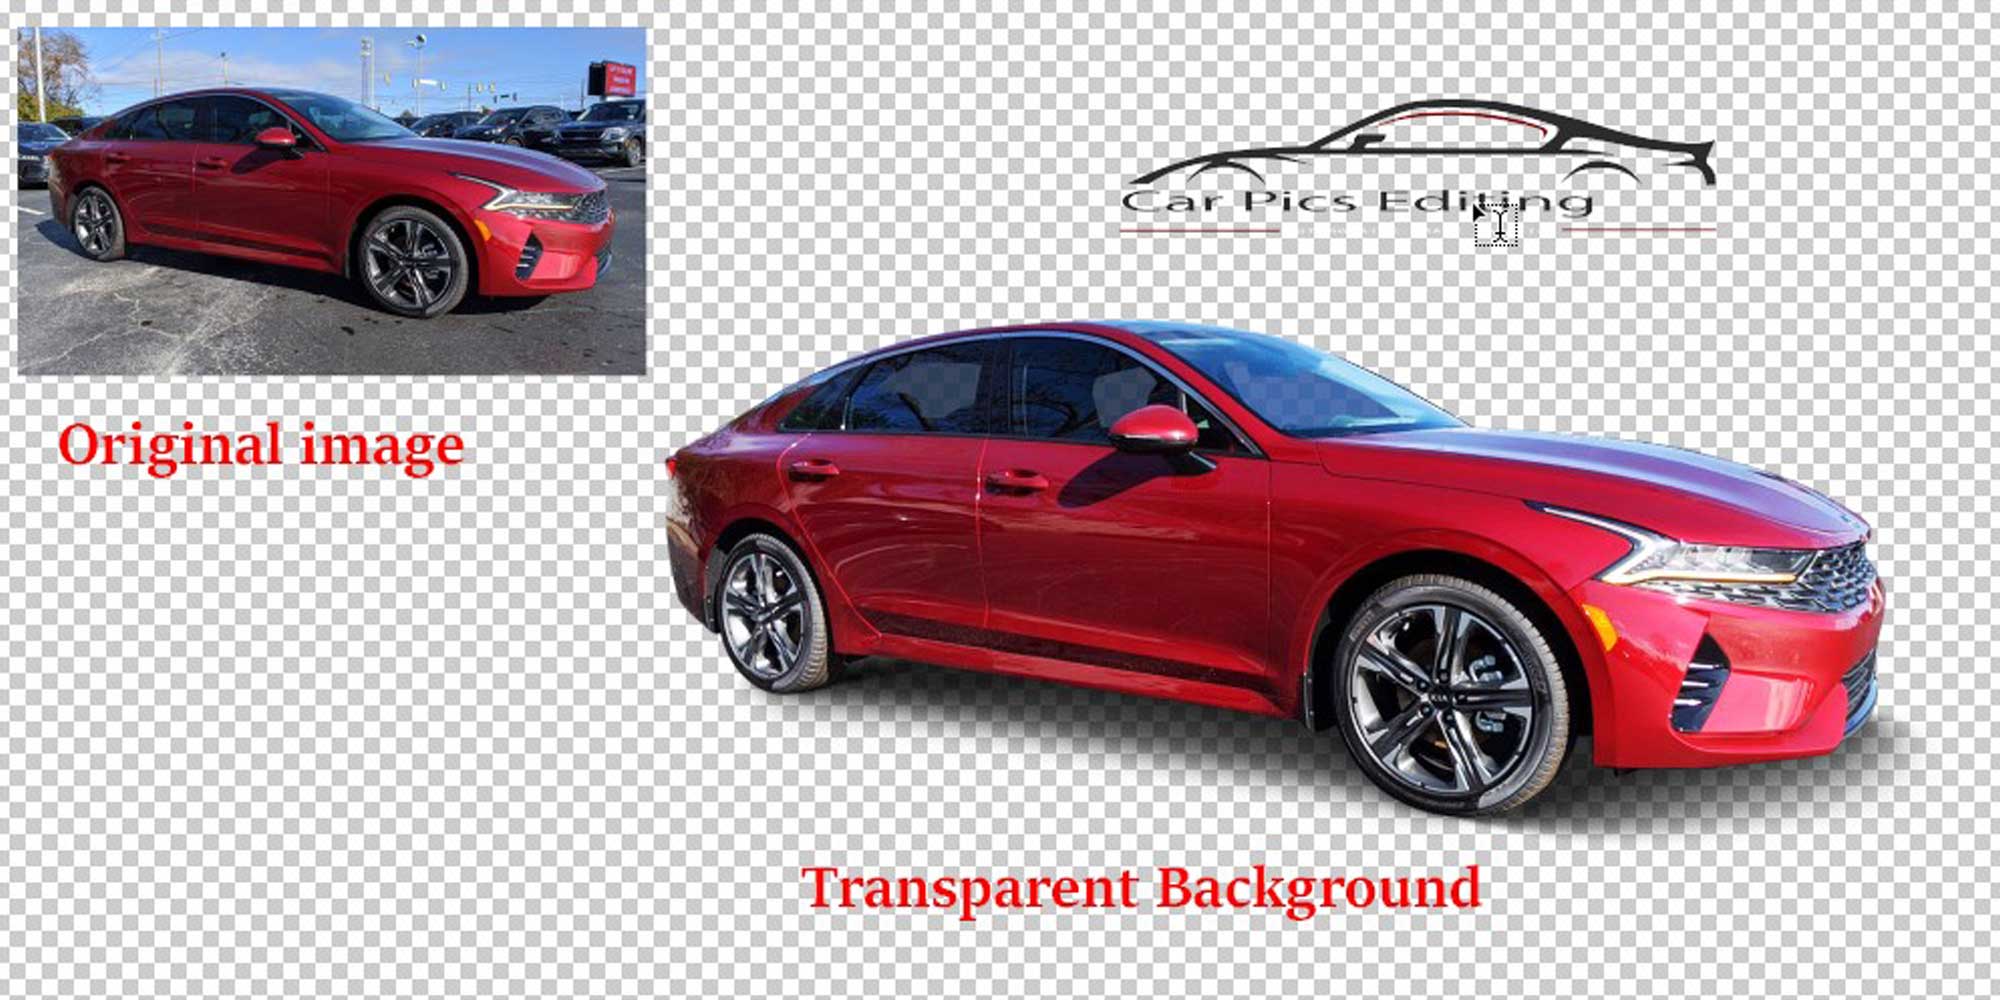 Car Transparent Background- Car Pics Editing